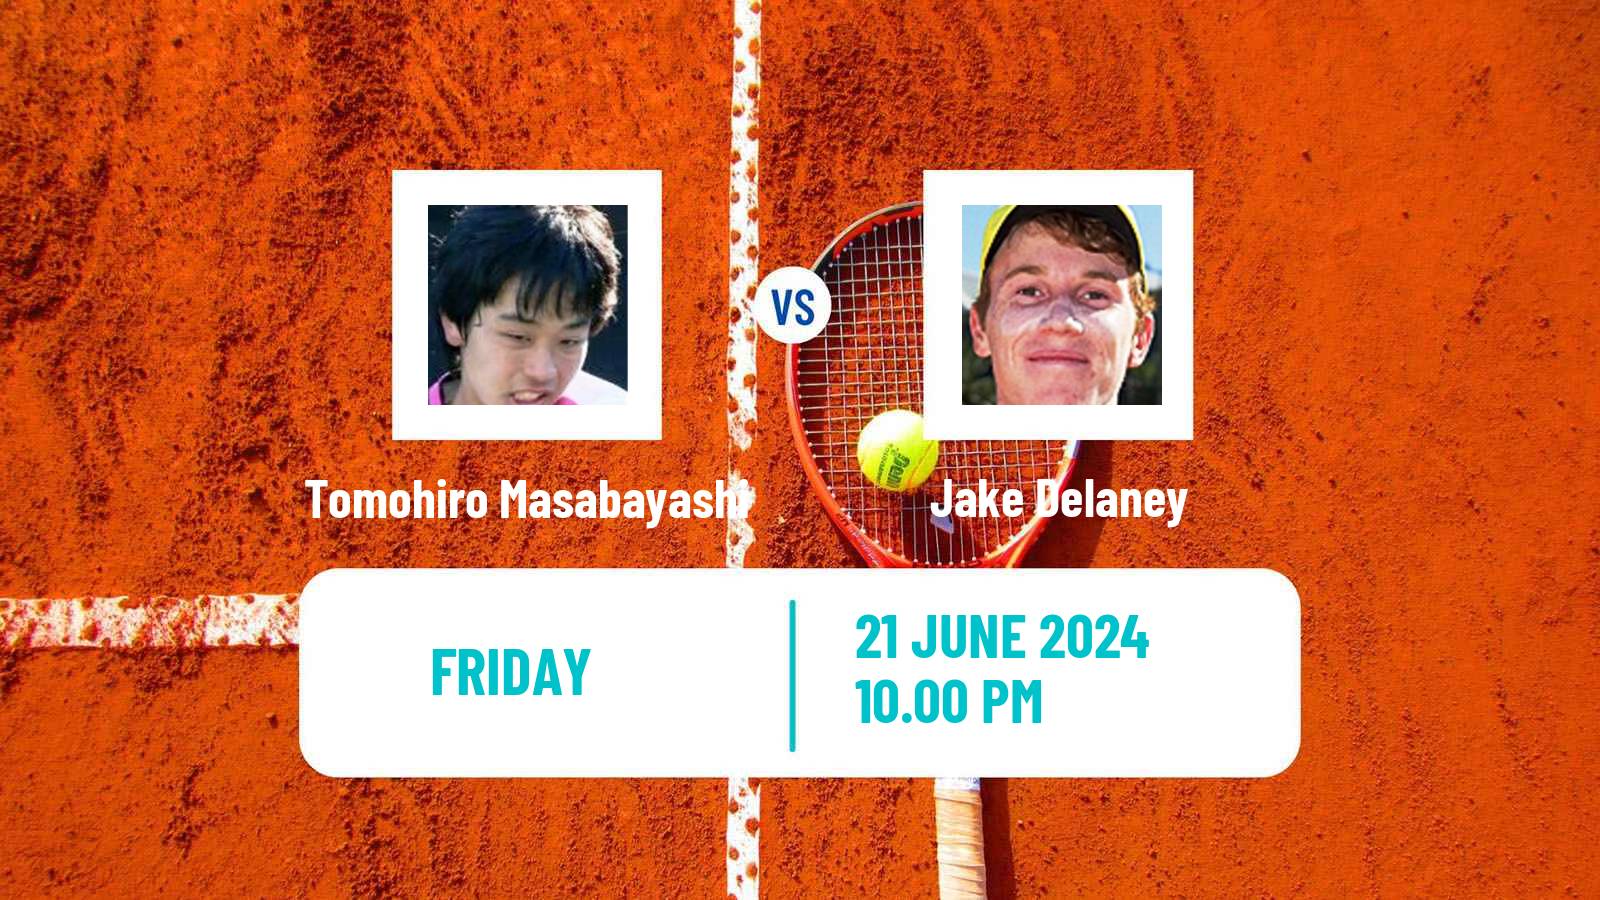 Tennis ITF M15 Hong Kong 2 Men Tomohiro Masabayashi - Jake Delaney